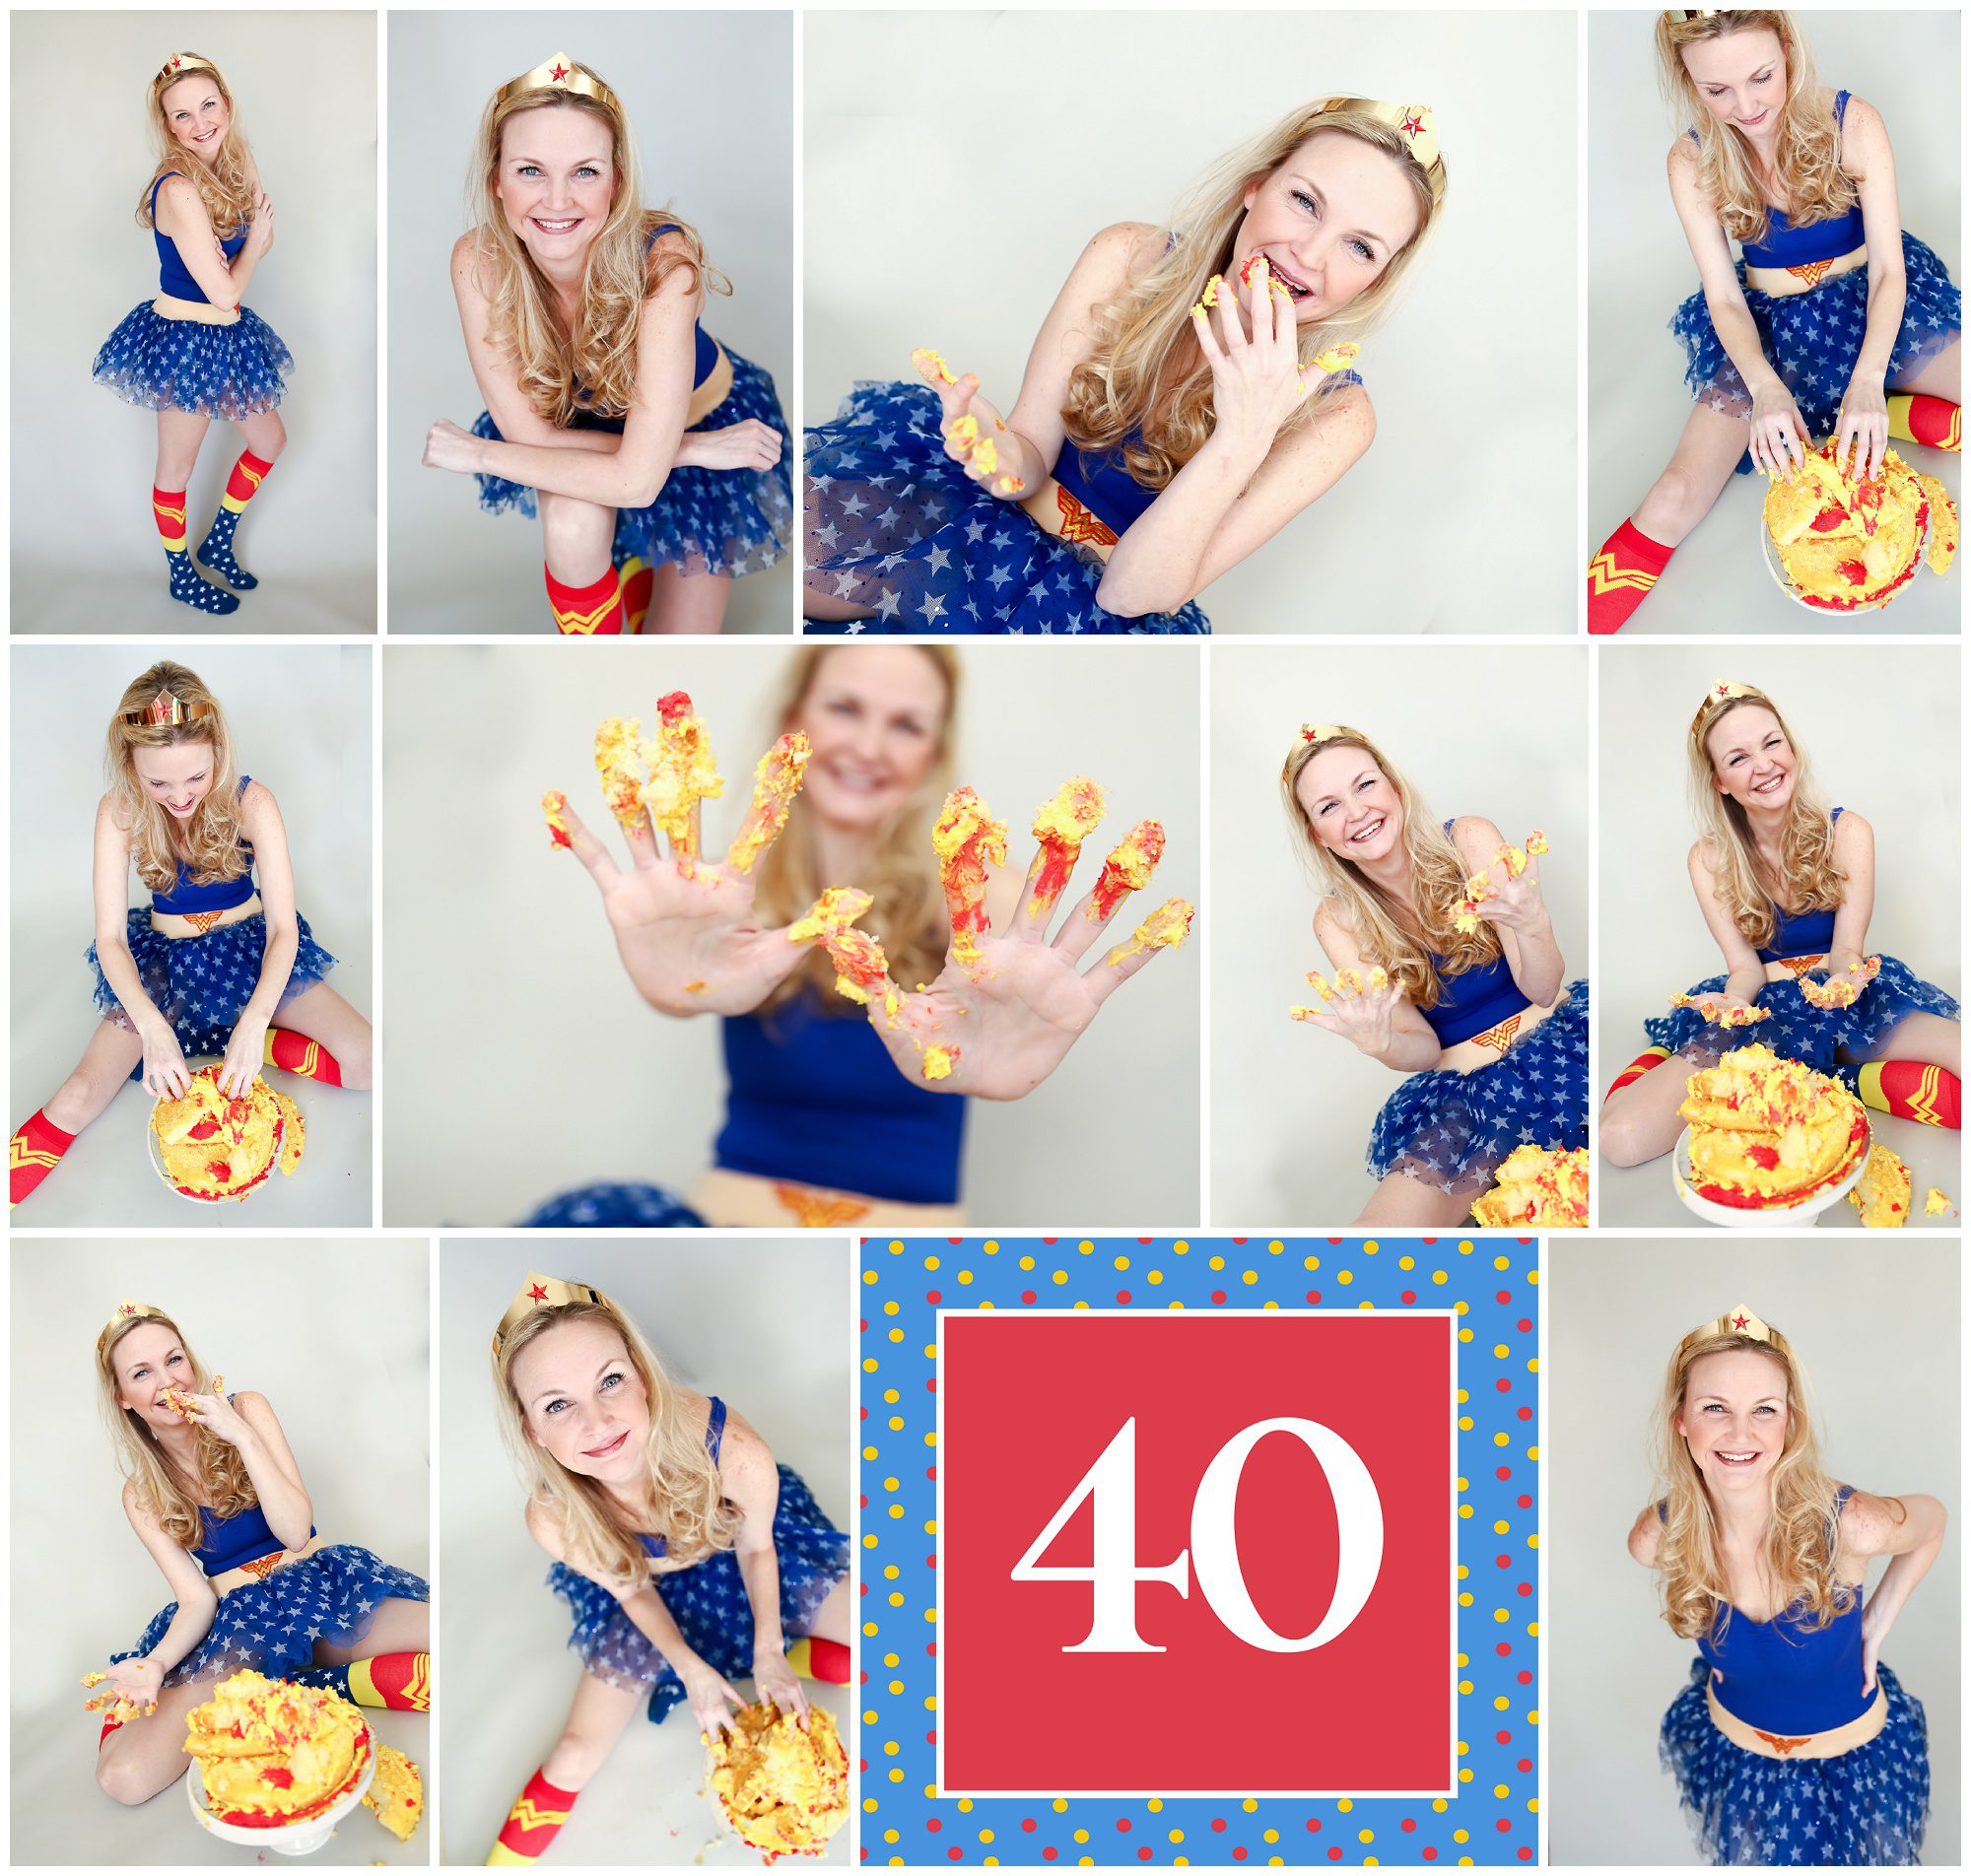 40th Birthday Wonder Woman Cake Smash Photoshoot charlottesville photographer portrait photography fluvanna palmyra lake monticello pictures funny hilarious